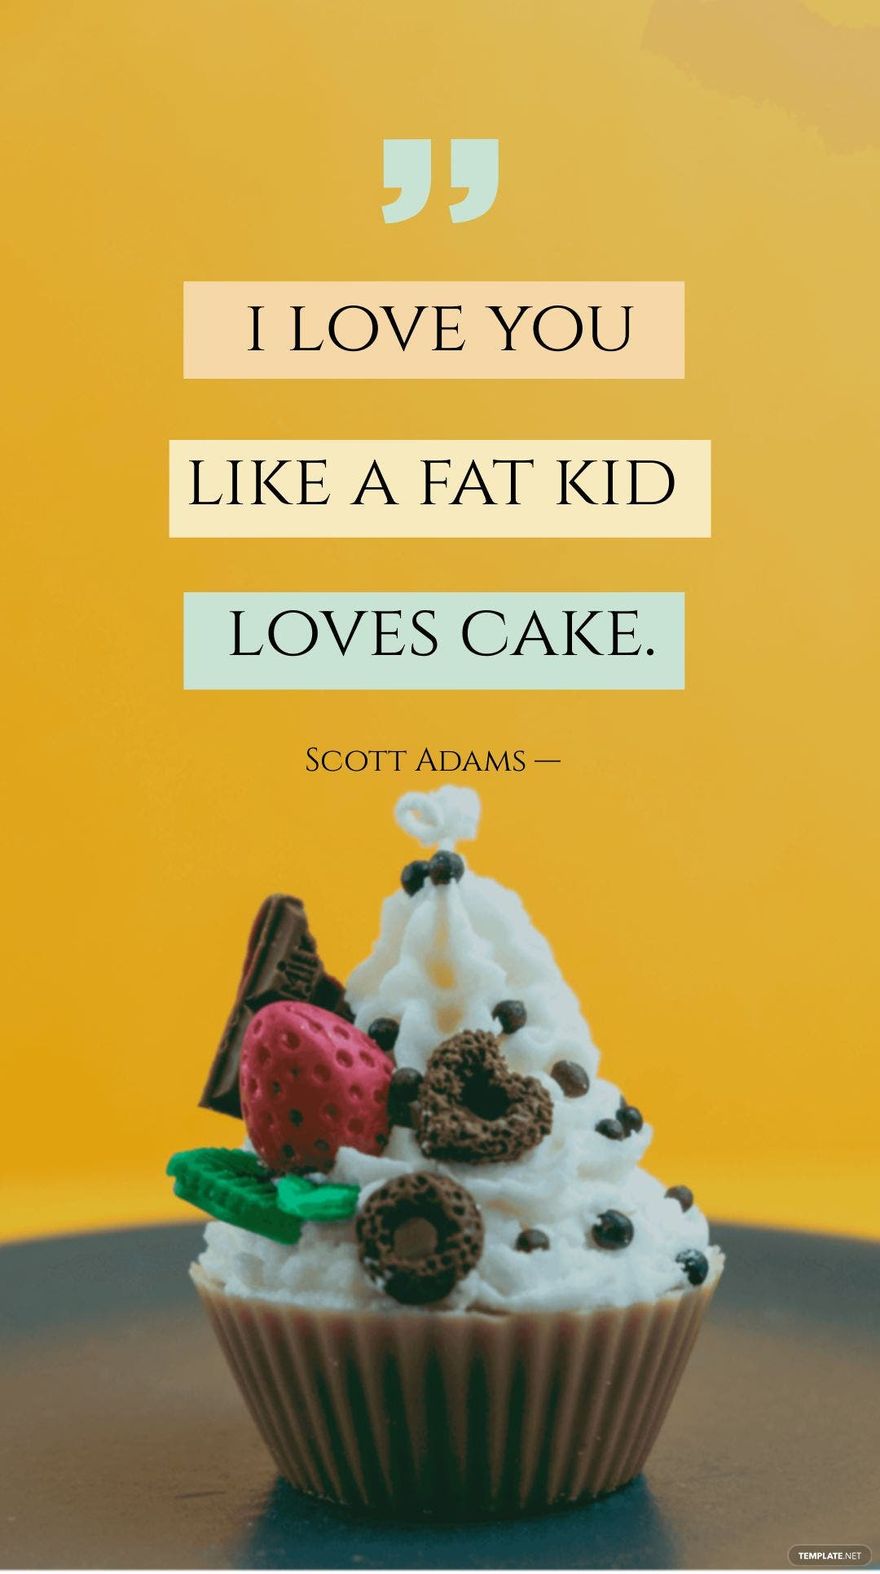 Scott Adams — “I love you like a fat kid loves cake.”